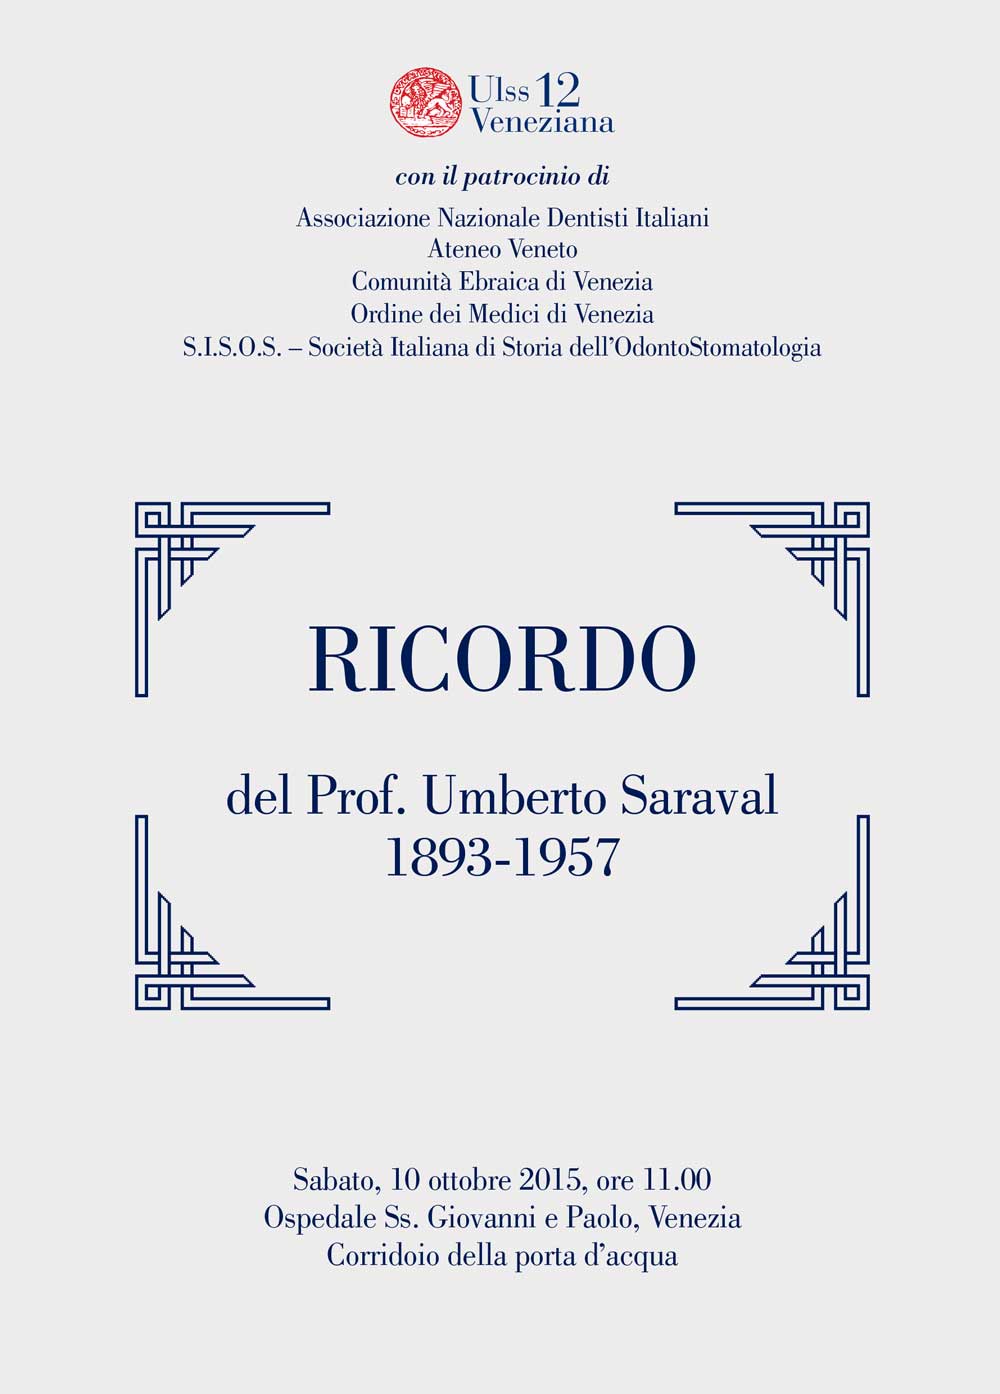 RICORDO del Prof. Umberto Saraval 1893-1957